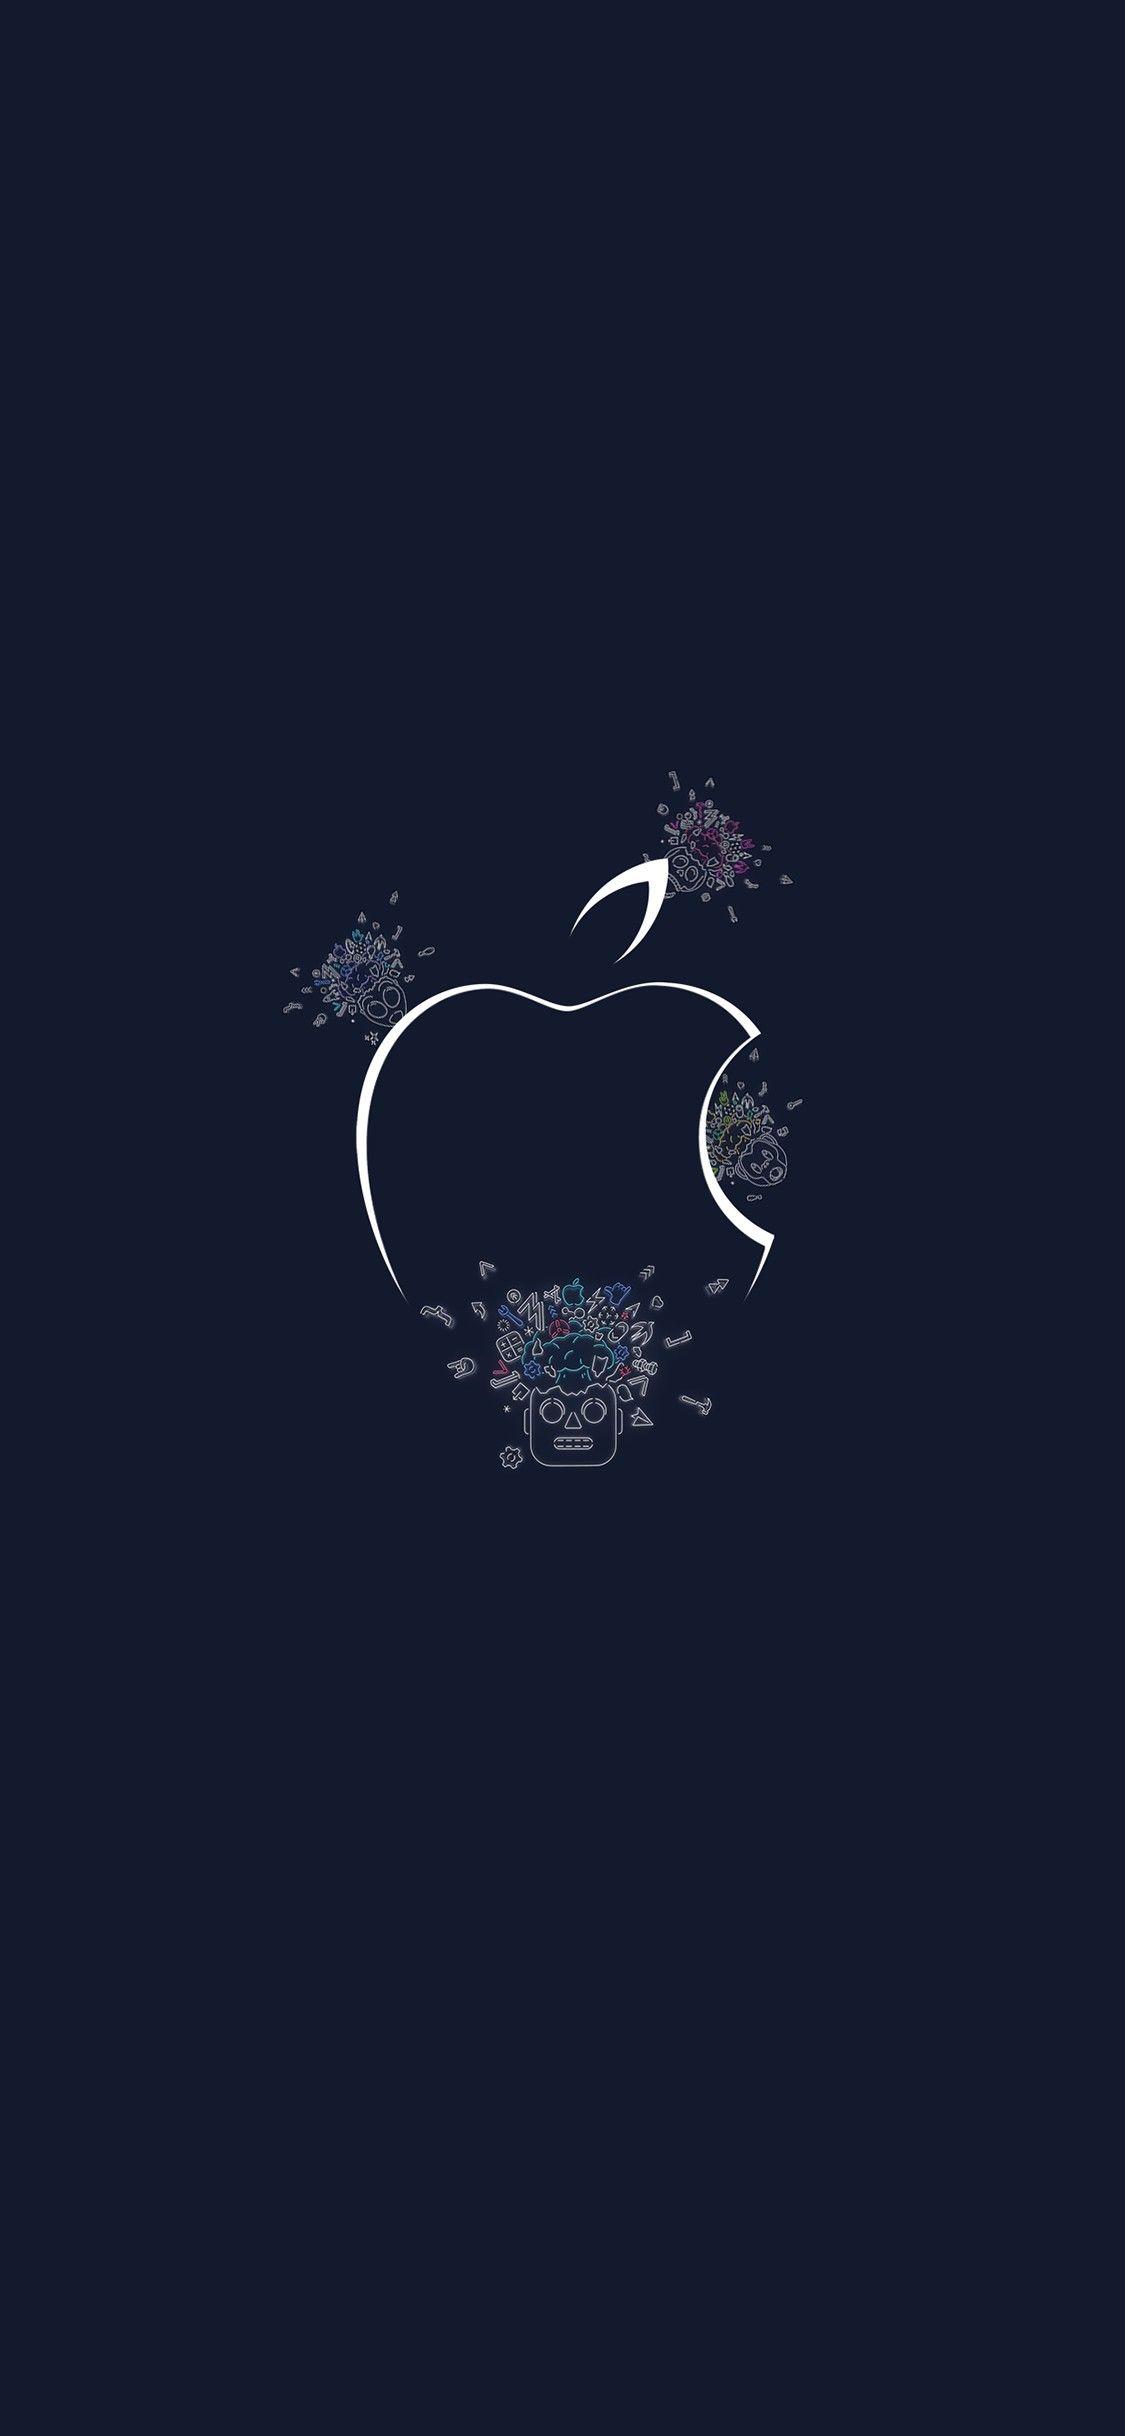 Best Of original Apple Logo Wallpaper. Apple wallpaper